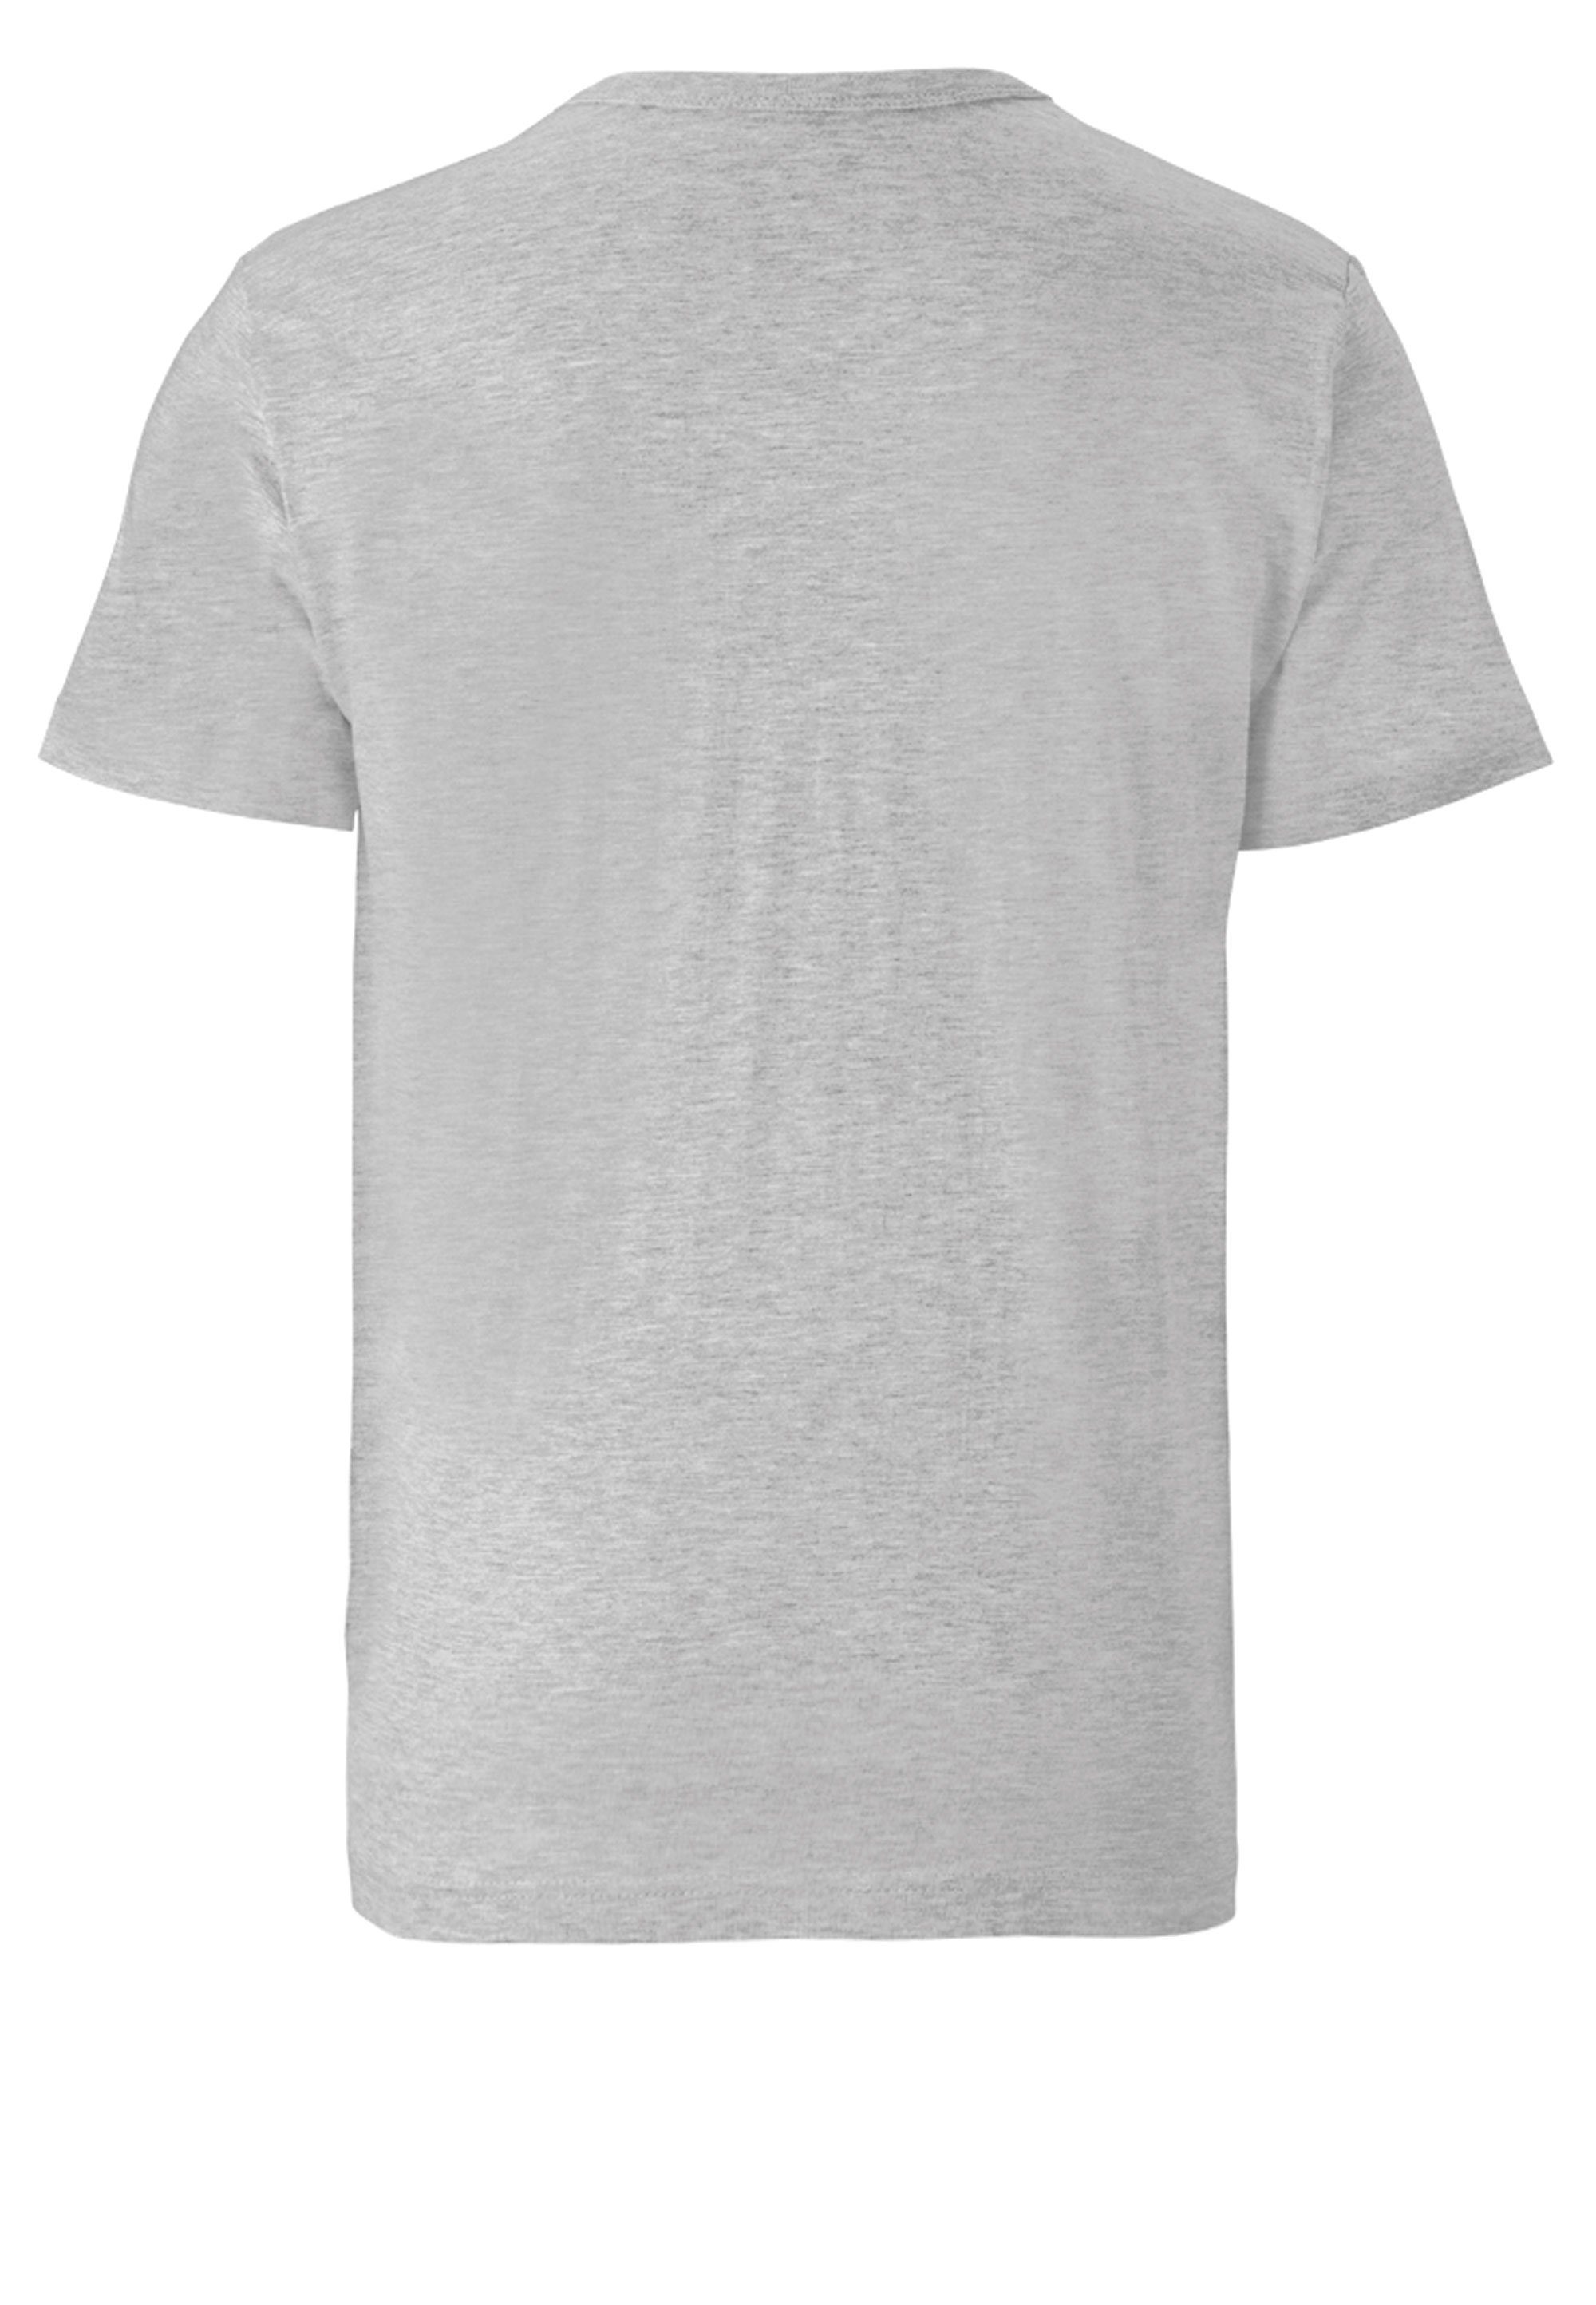 LOGOSHIRT T-Shirt Sesamstrasse - Krümelmonster grau-meliert lizenziertem Originalddesign mit